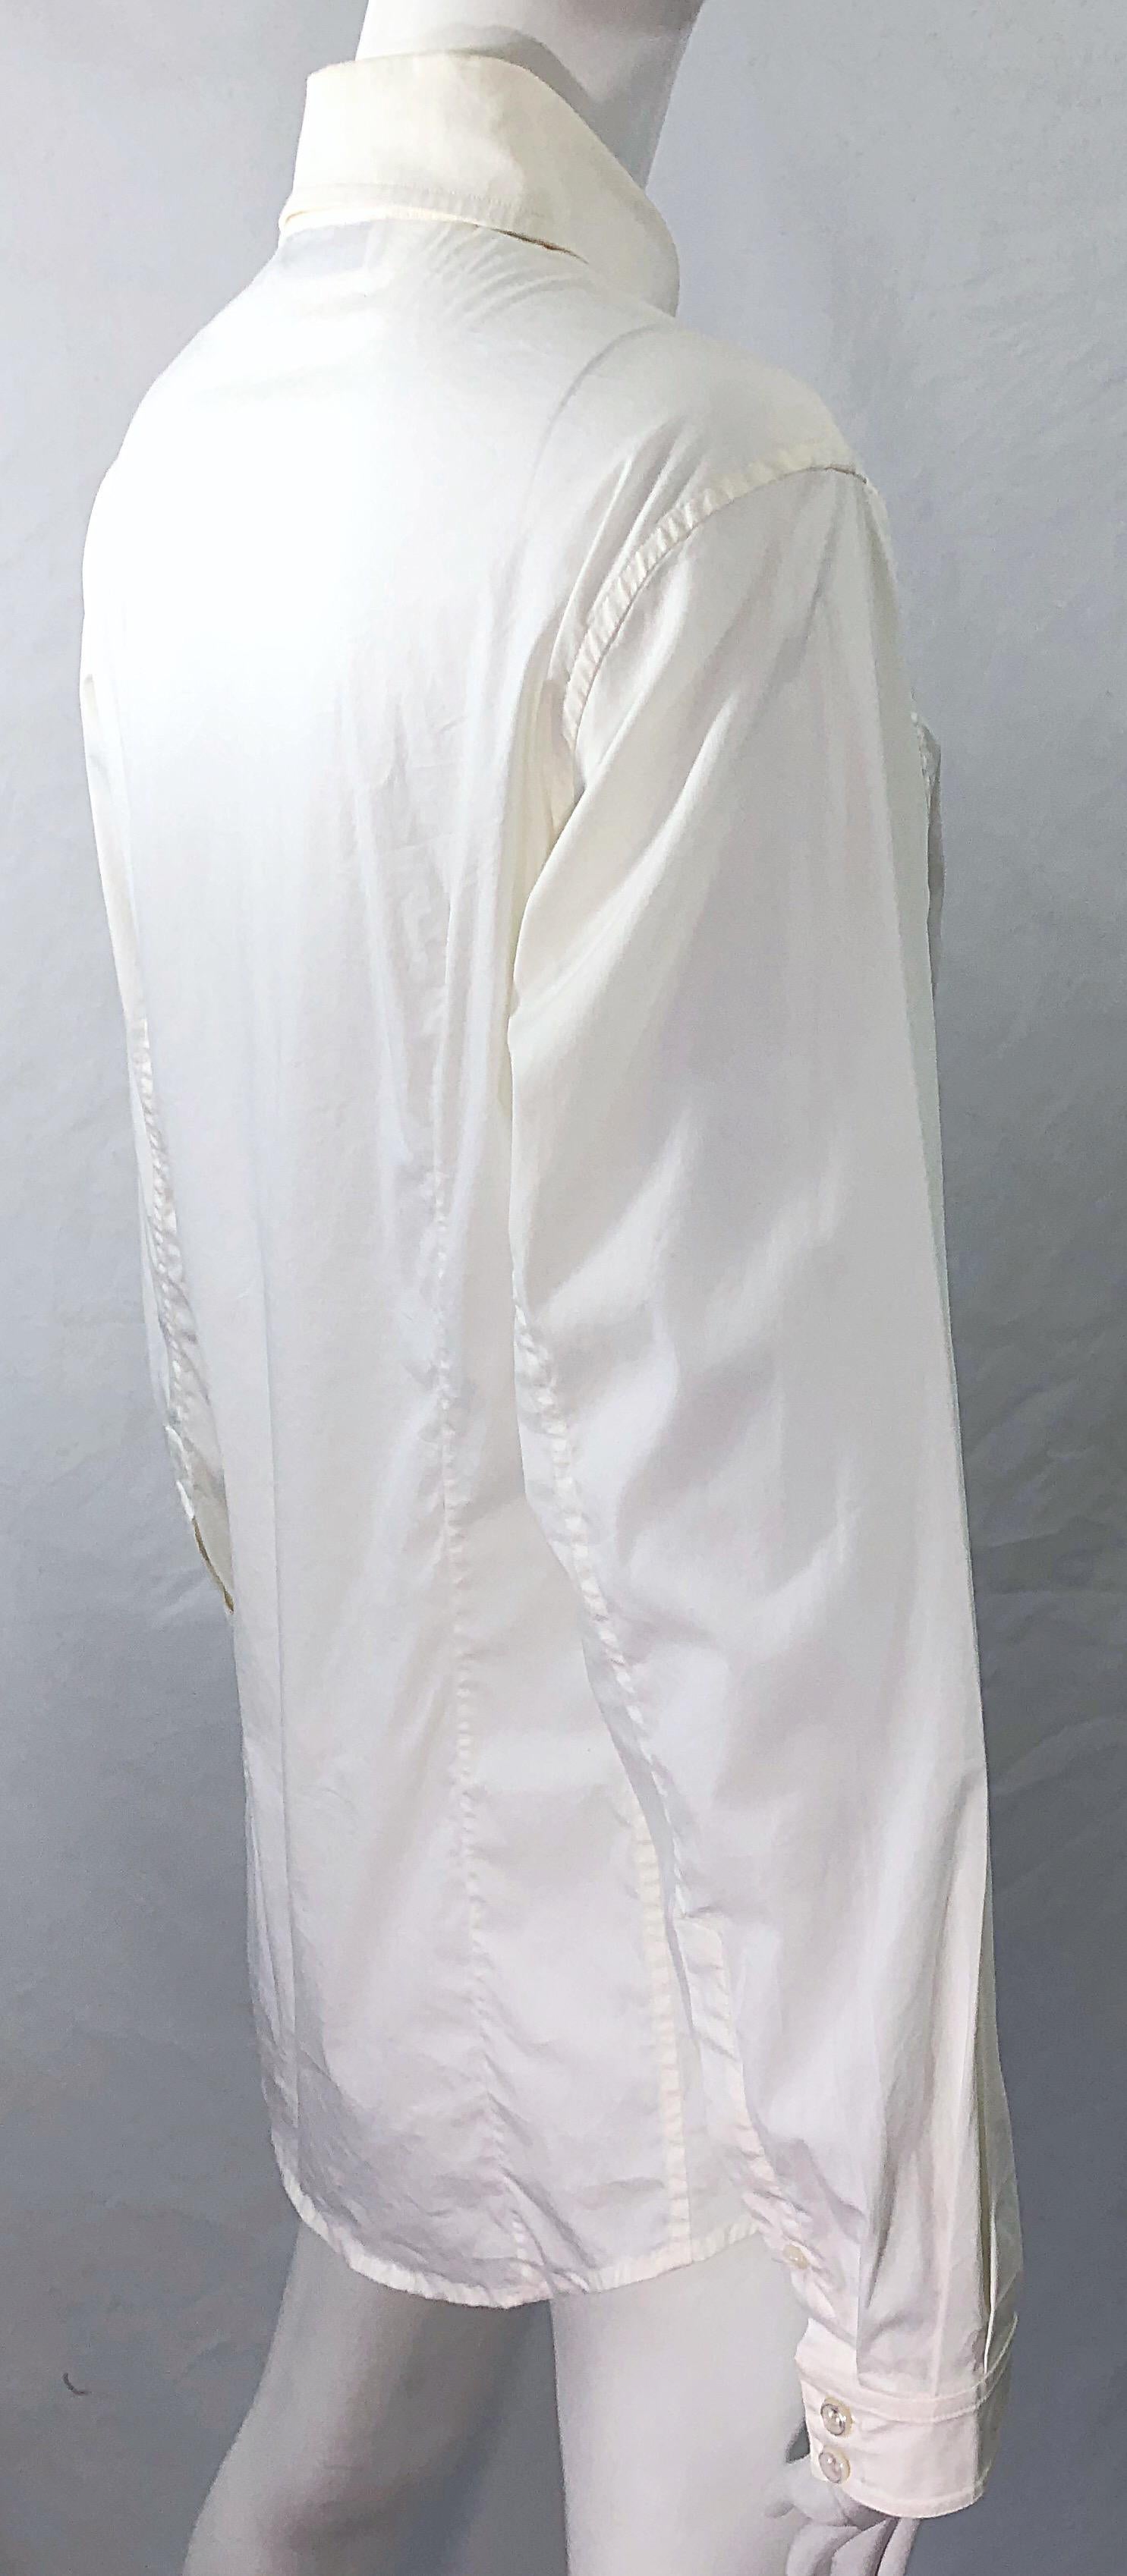 Yves Saint Laurent by Tom Ford YSL Size 40 / 8 Ivory White Tuxedo Blouse Shirt For Sale 6